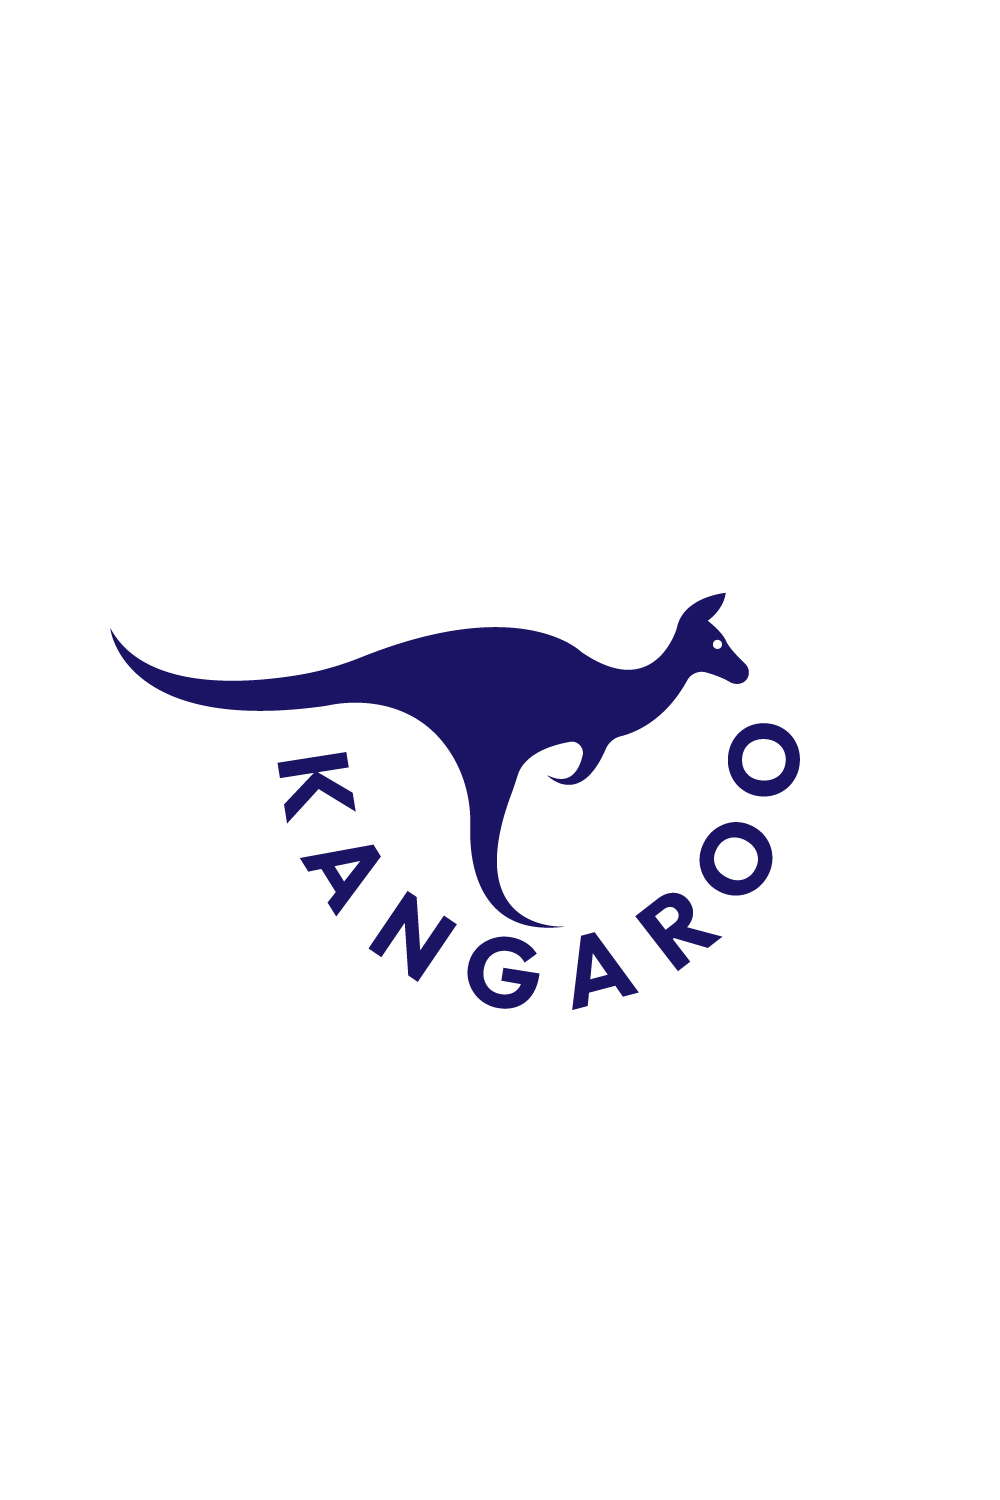 Kangaroo Animal Logo and Icon pinterest preview image.